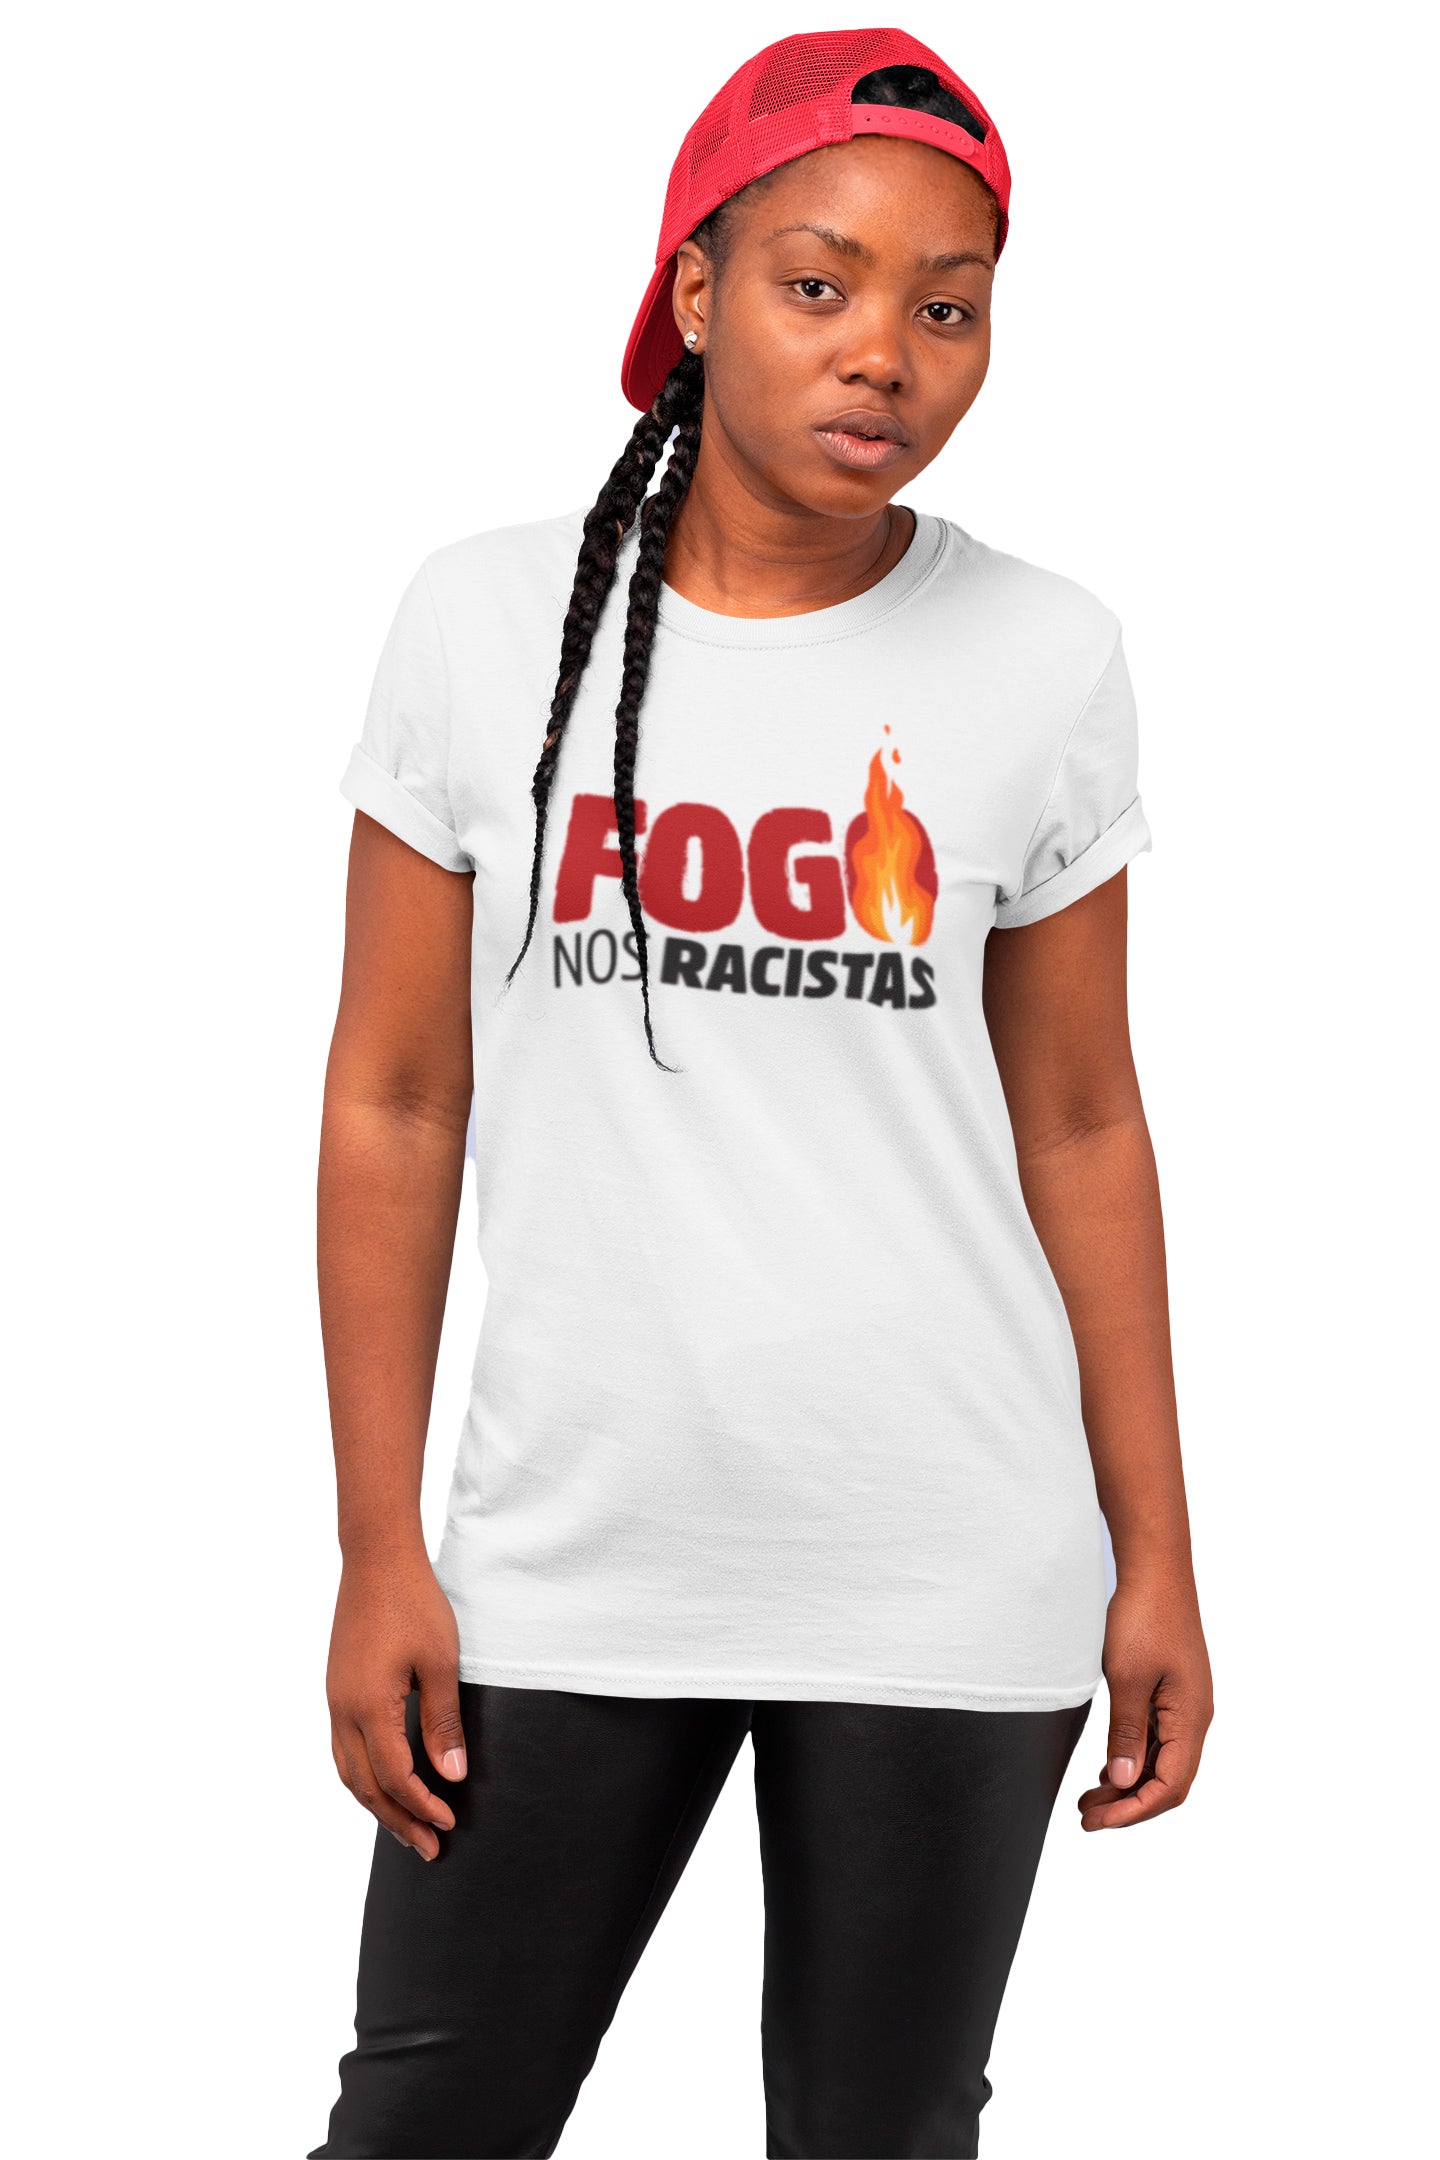 Camiseta Feminina Fogo Nos Racistas